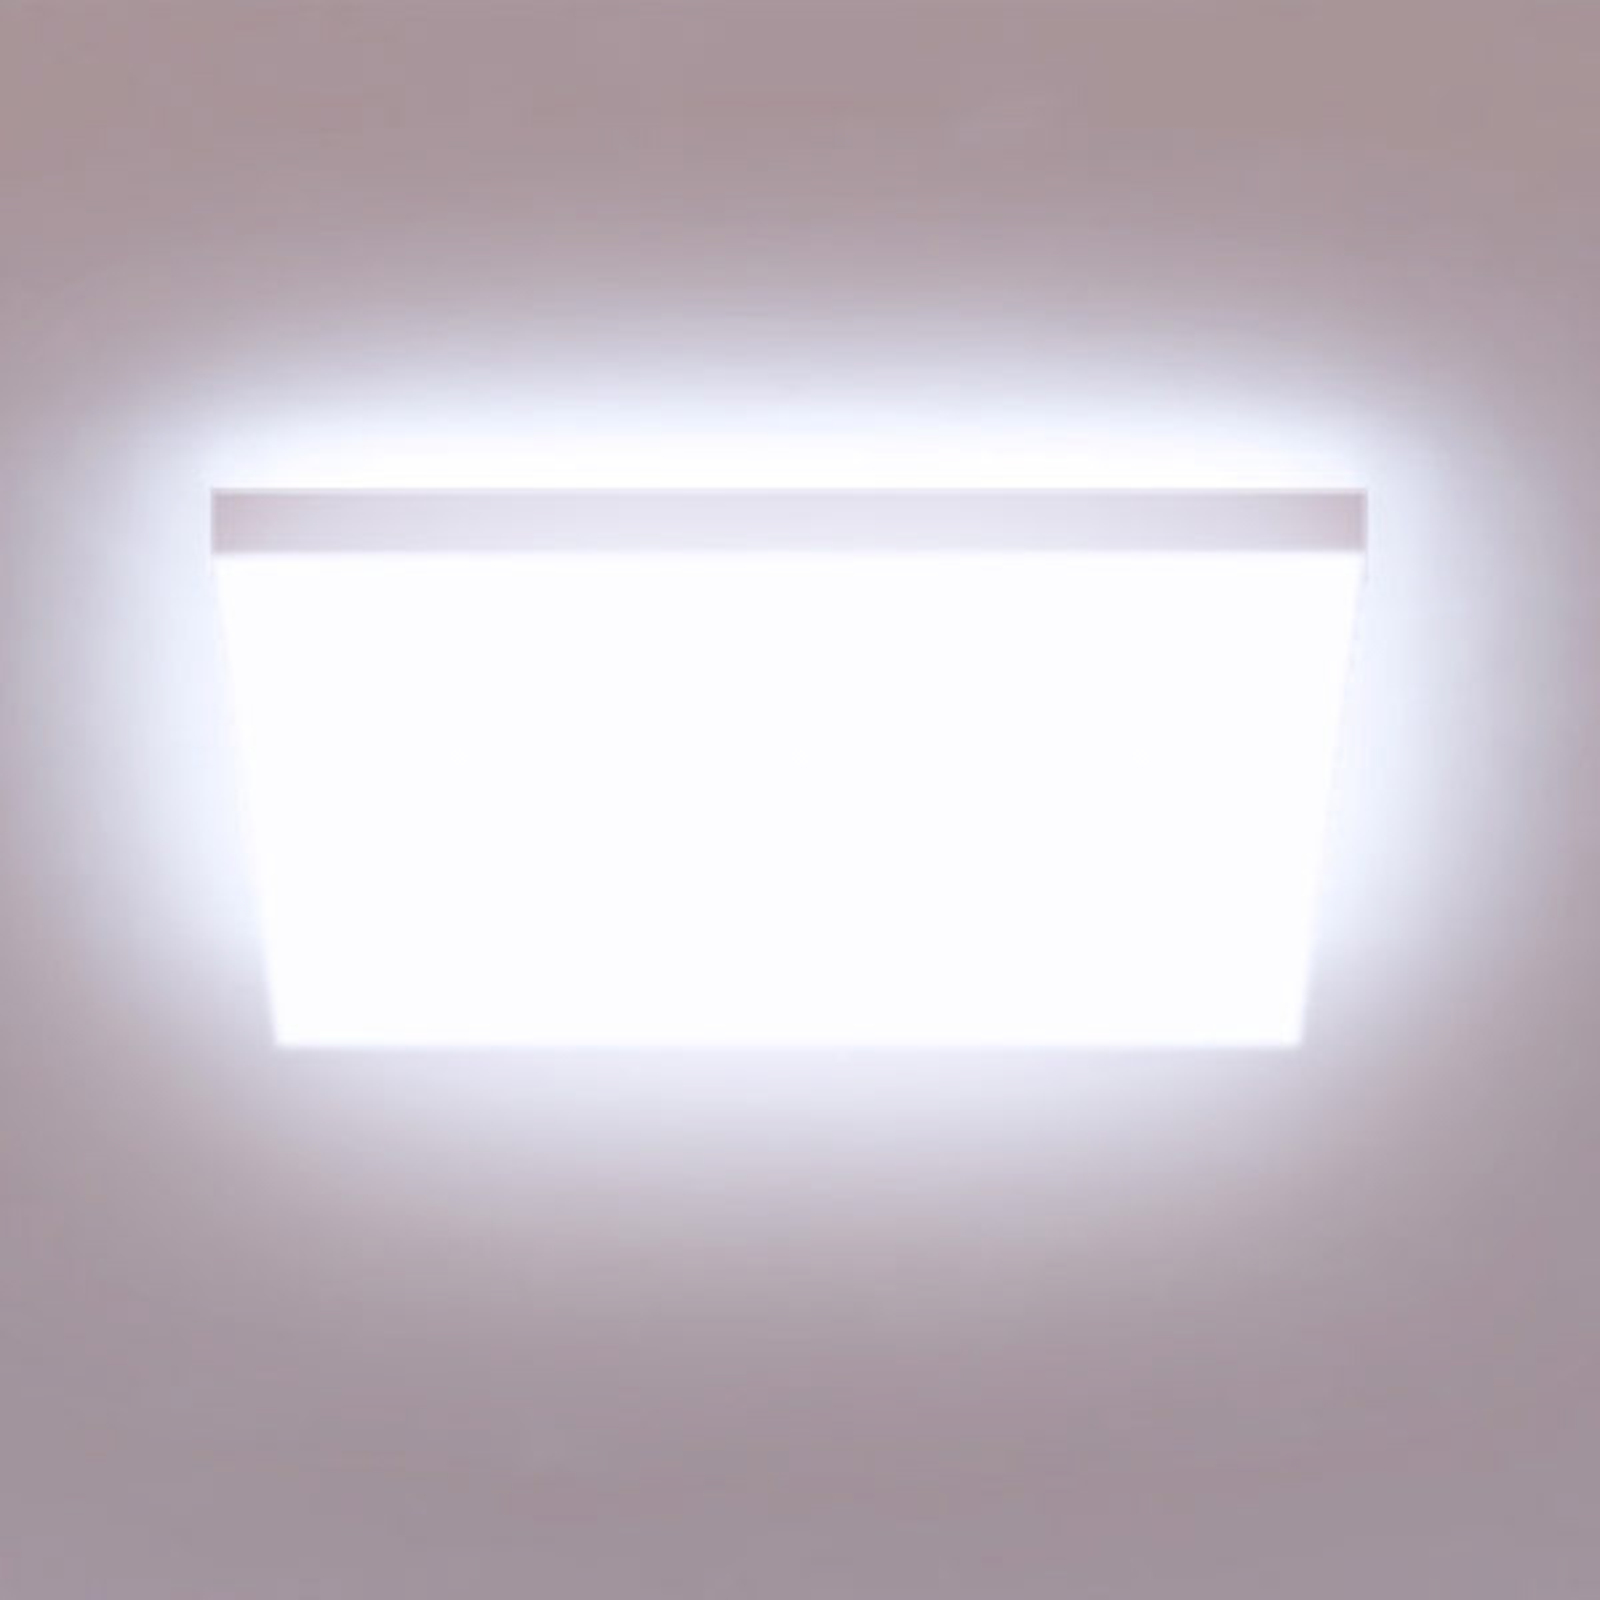 Müller Licht tint LED paneel Loris, 45x45cm